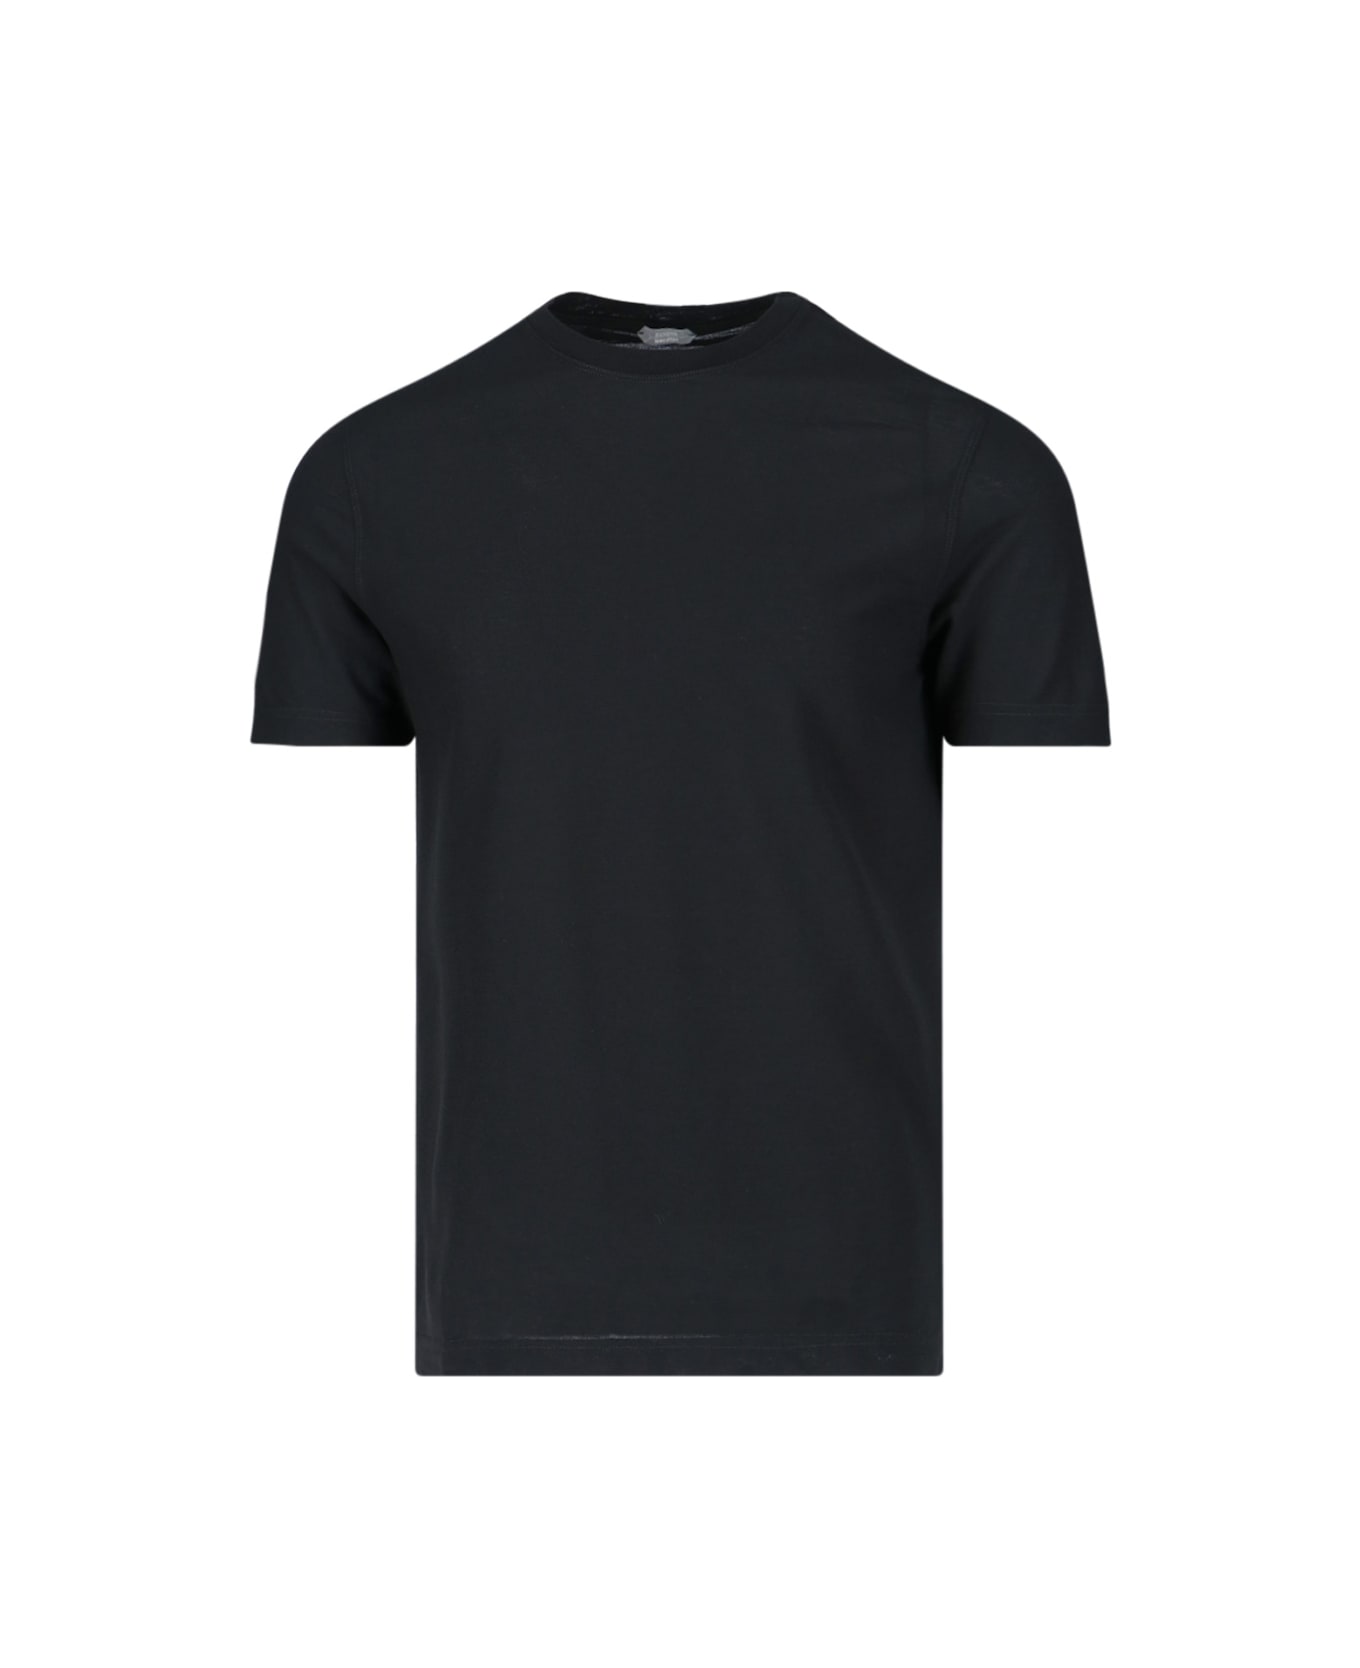 Zanone Icecotton T-shirt - Black   シャツ